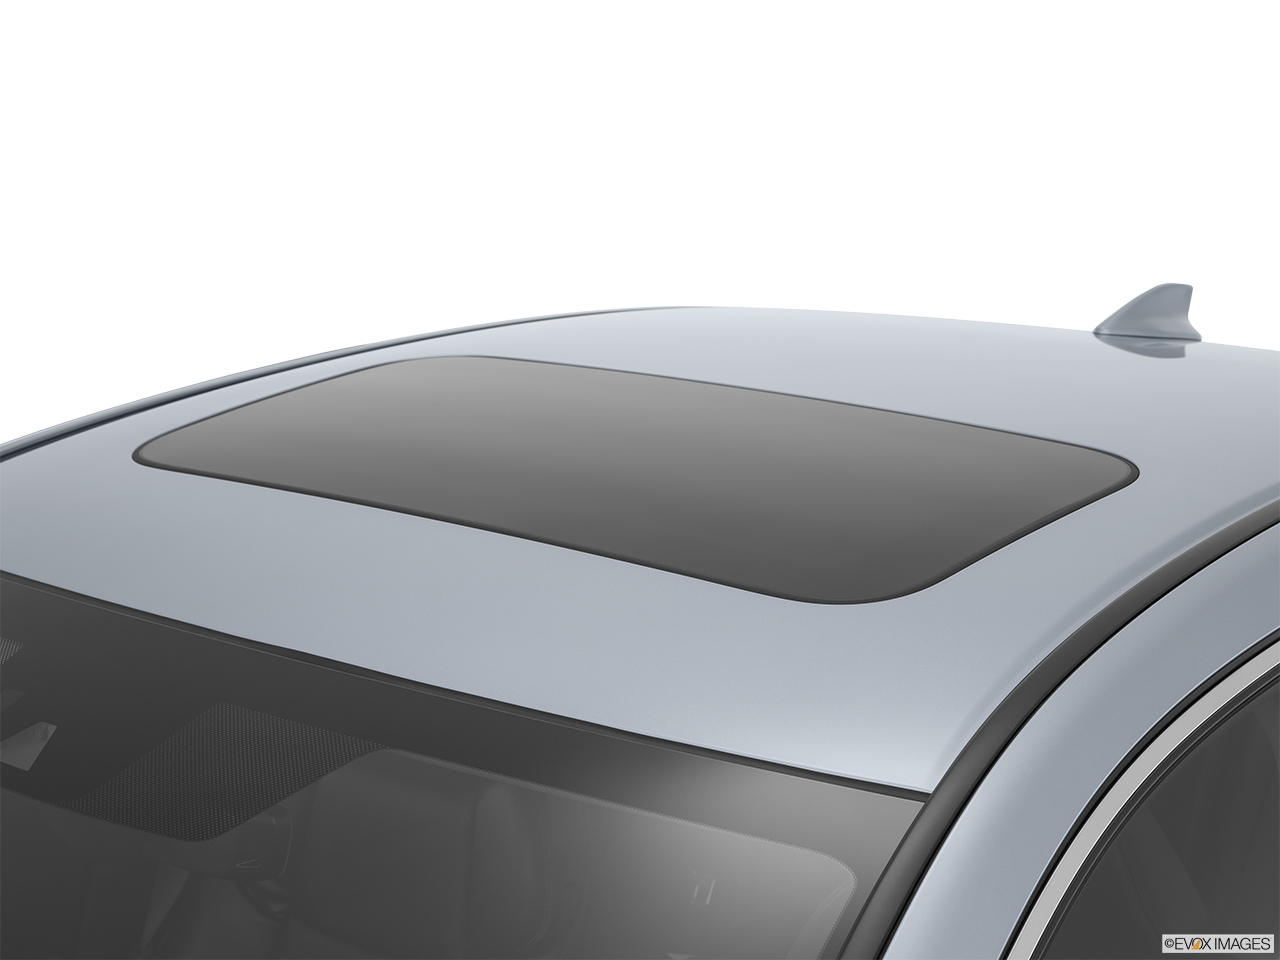 2015 Acura TLX 2.4 8-DCP P-AWS Sunroof/moonroof. 